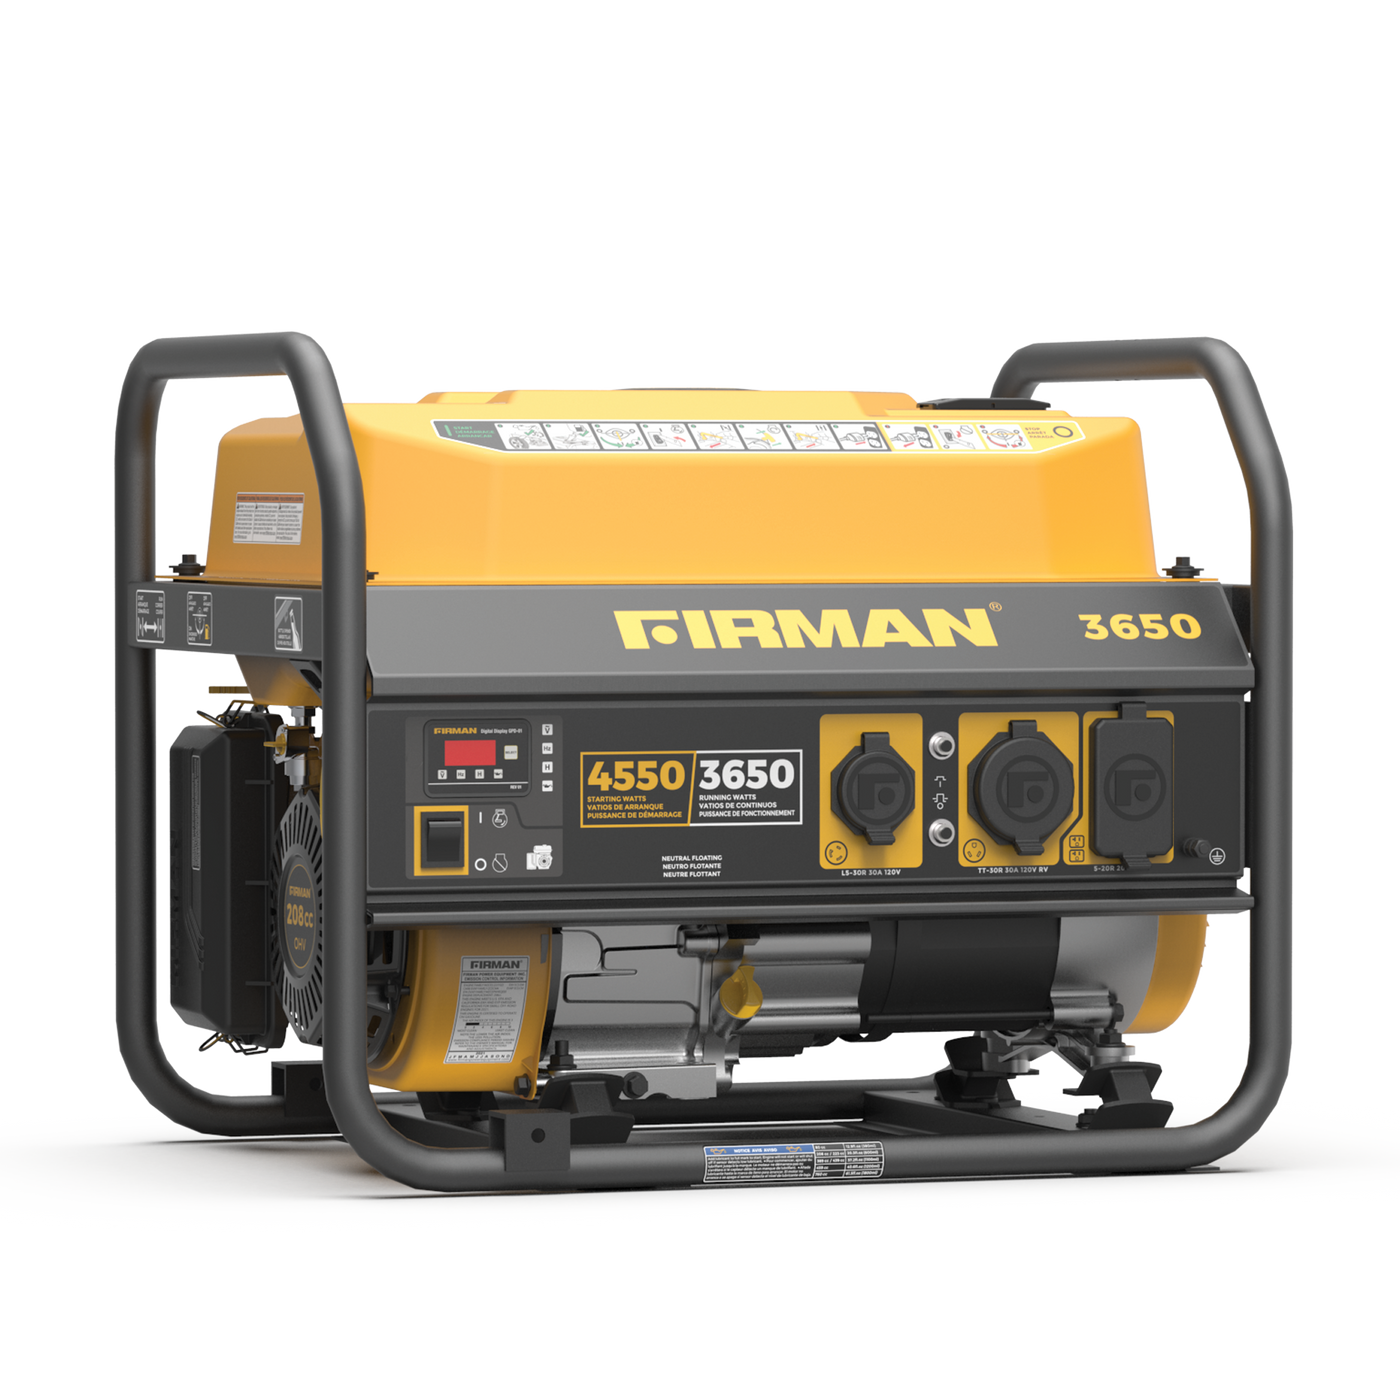 triathlon Teenager synder Gas Portable Generator 4550W Recoil Start 120V – FIRMAN Power Equipment